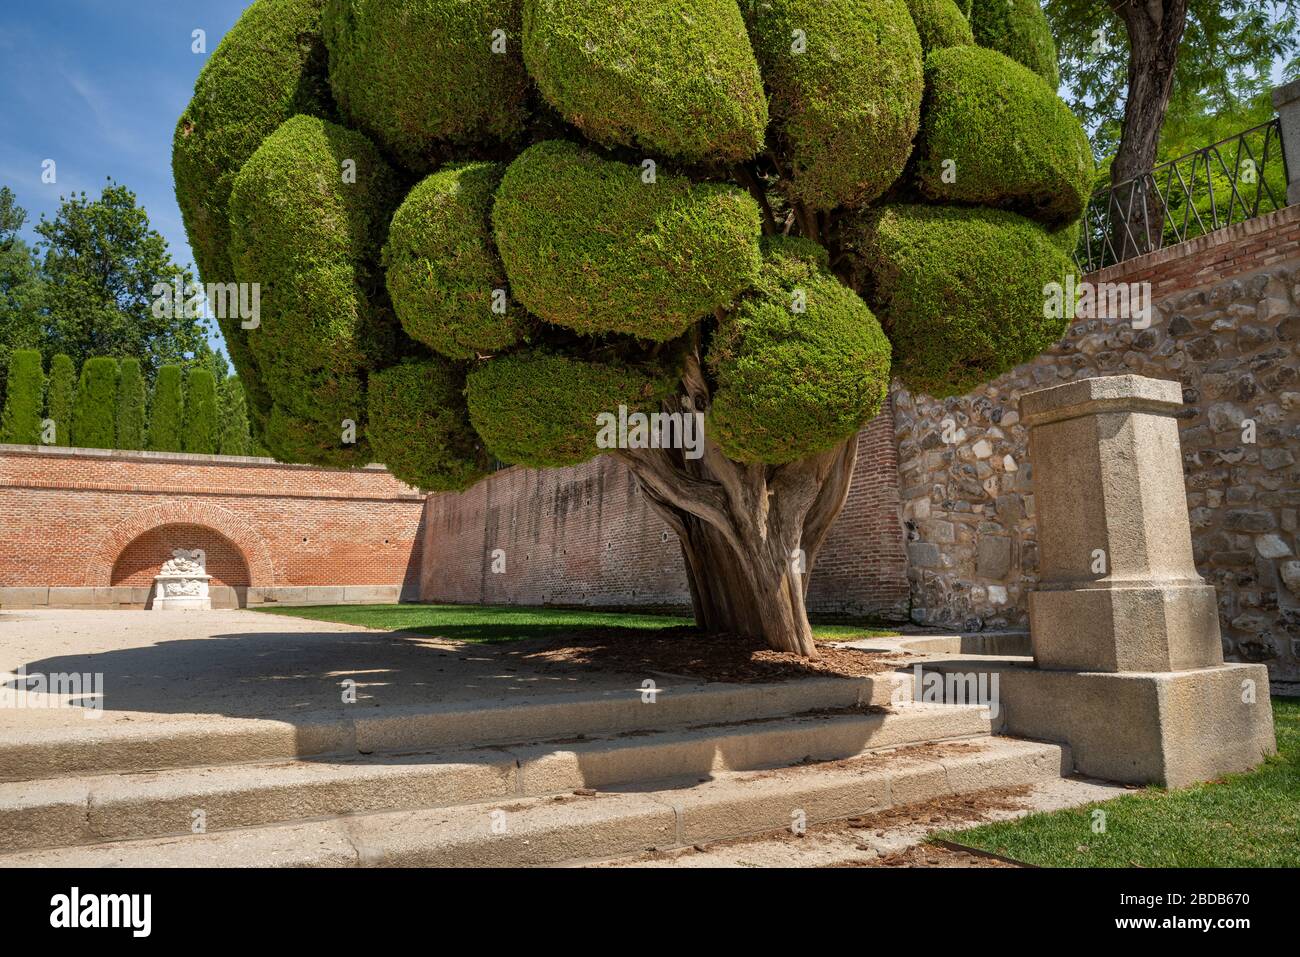 Madrid (Spain): Unusual shaped Cypress tree in the Park of Buen Retiro Stock Photo